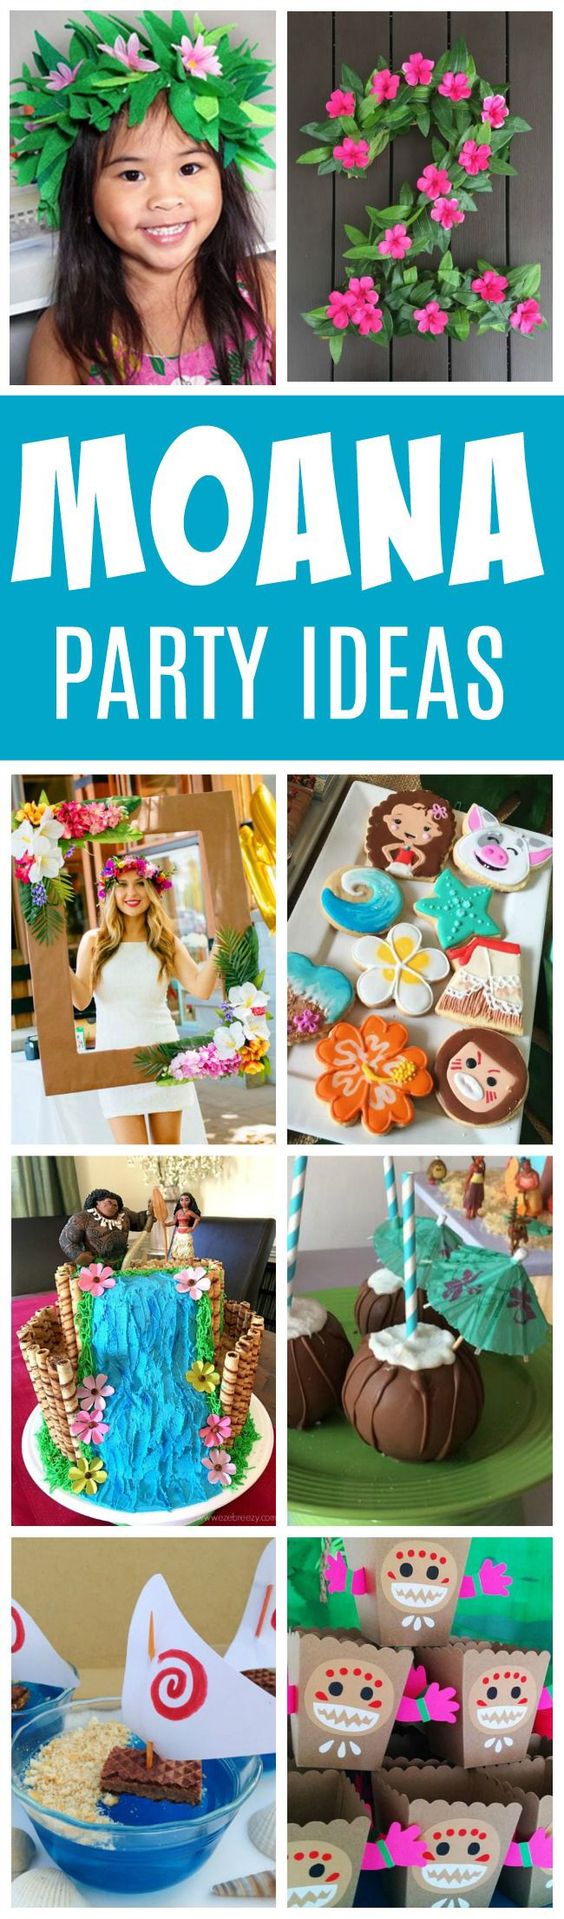 27 Disney Moana Birthday Party Ideas - Pretty My Party